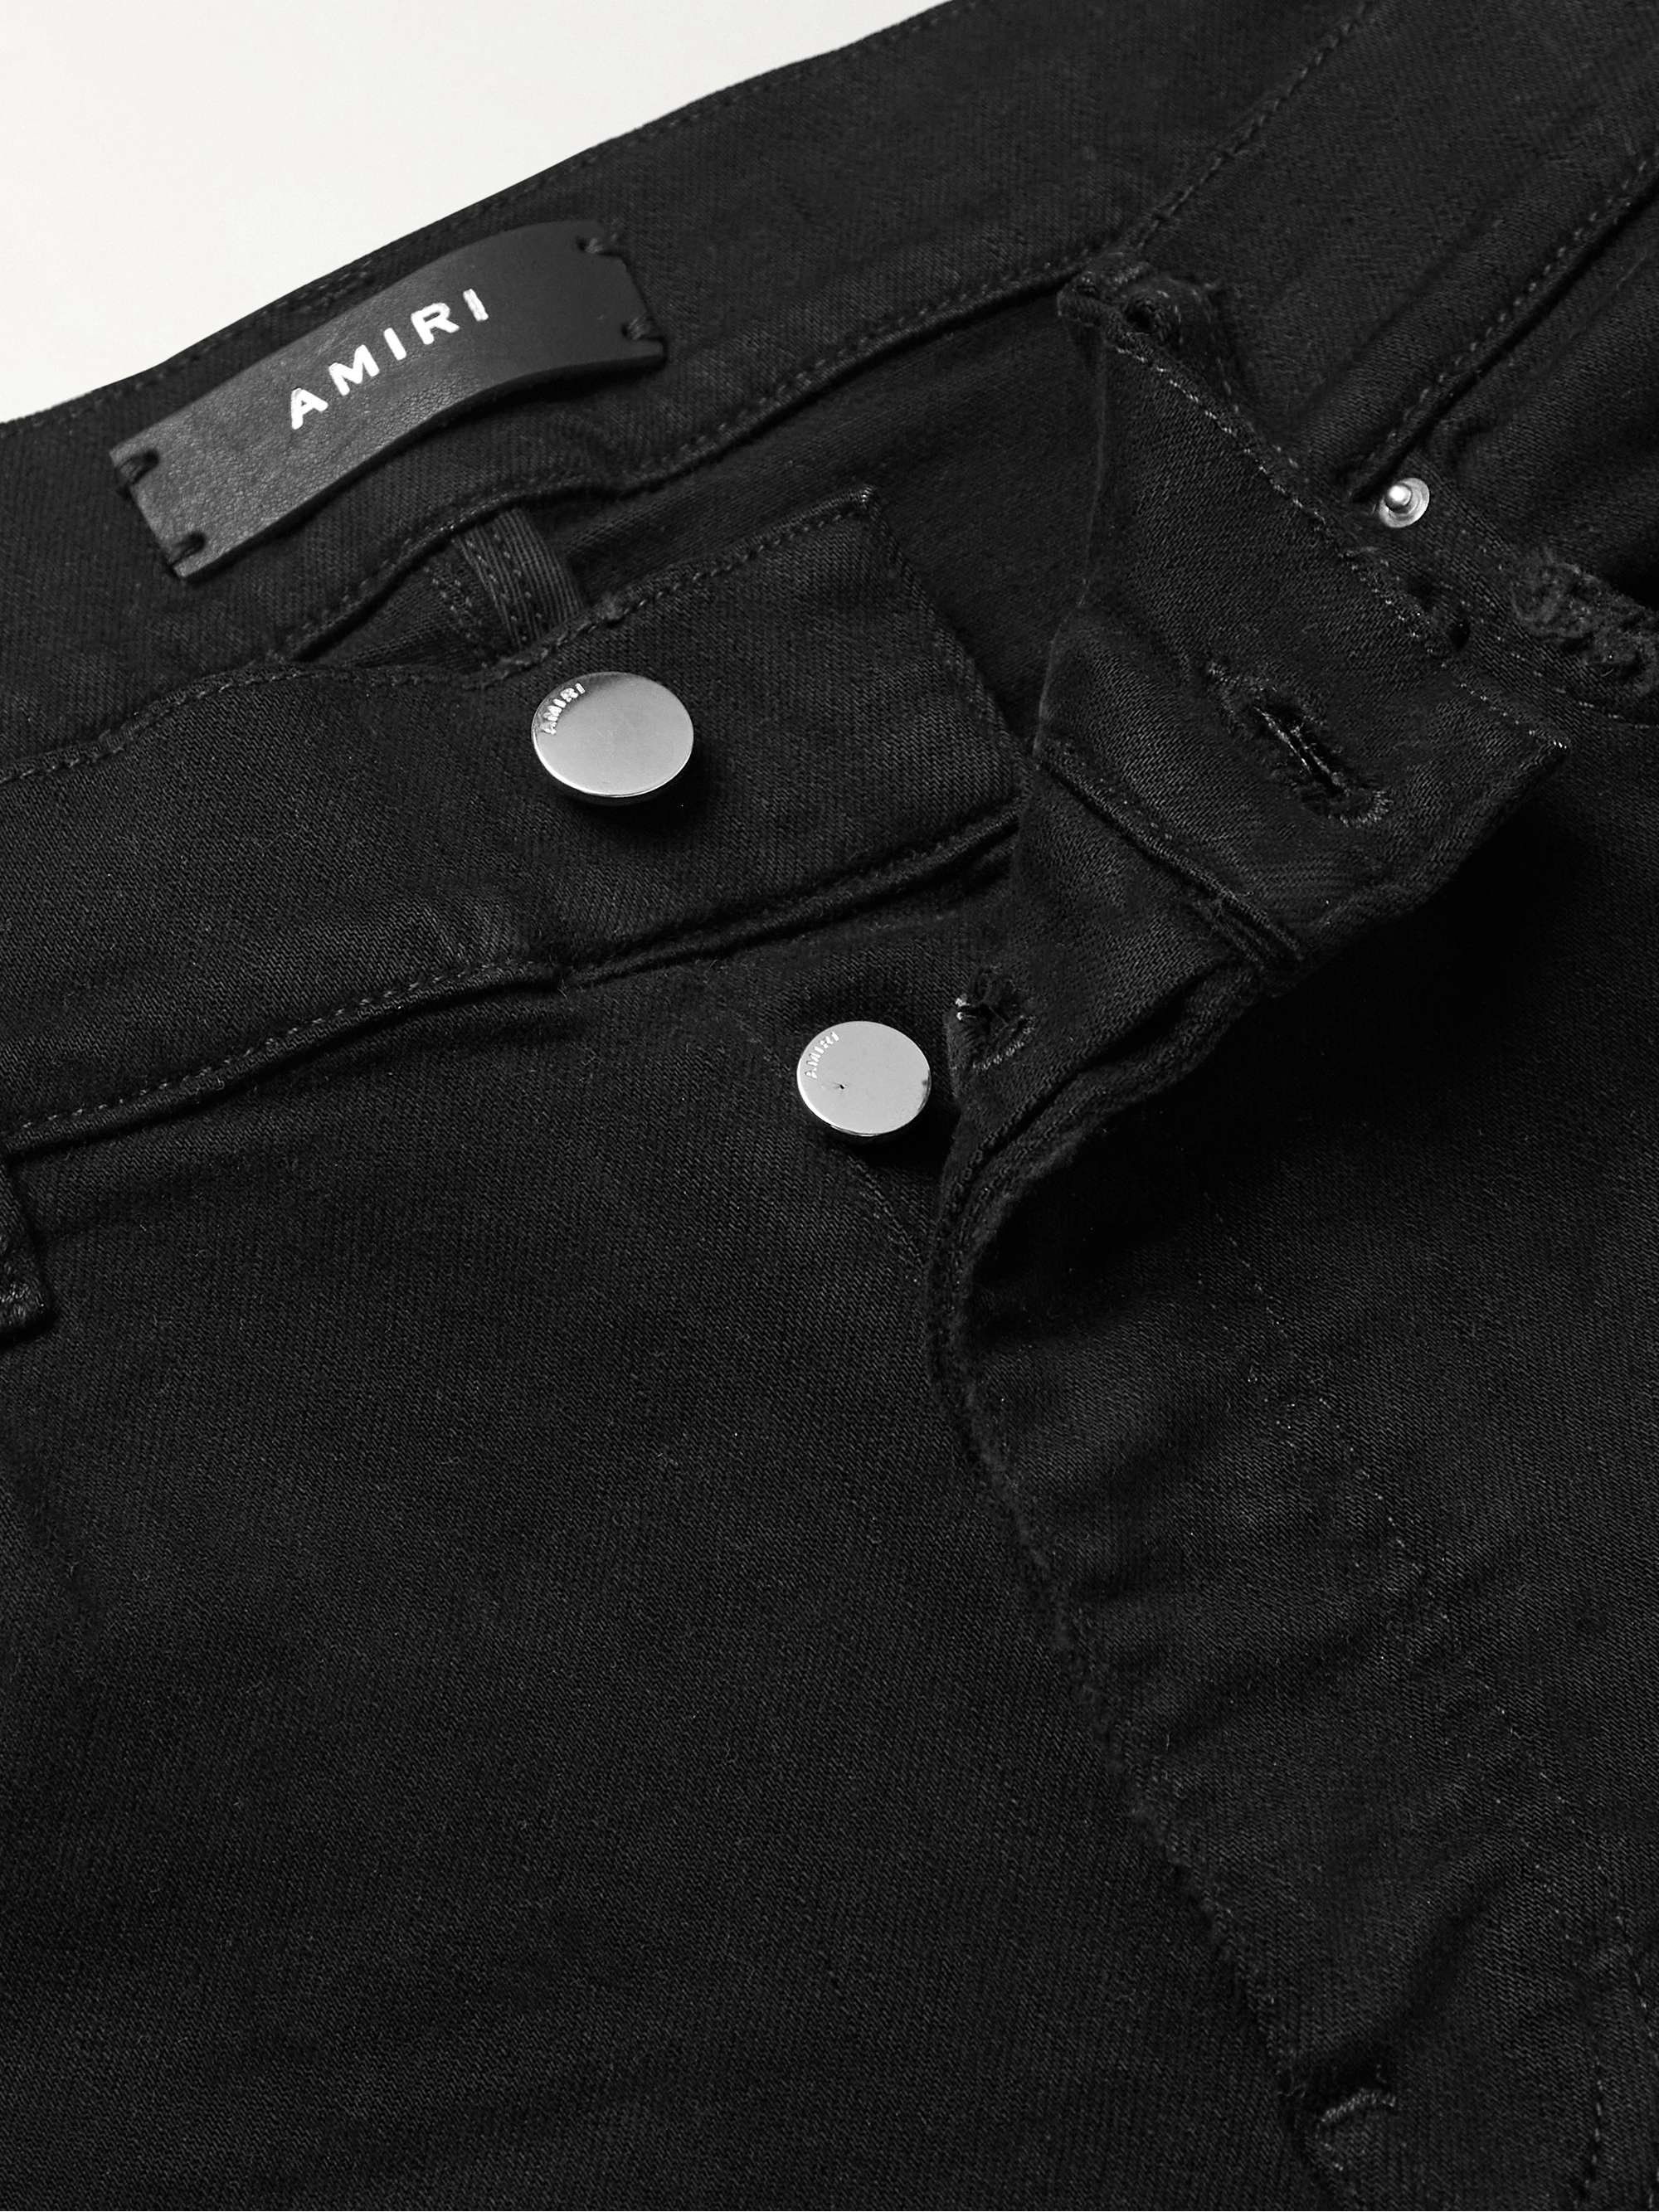 AMIRI MX1 Skinny-Fit Panelled Distressed Jeans